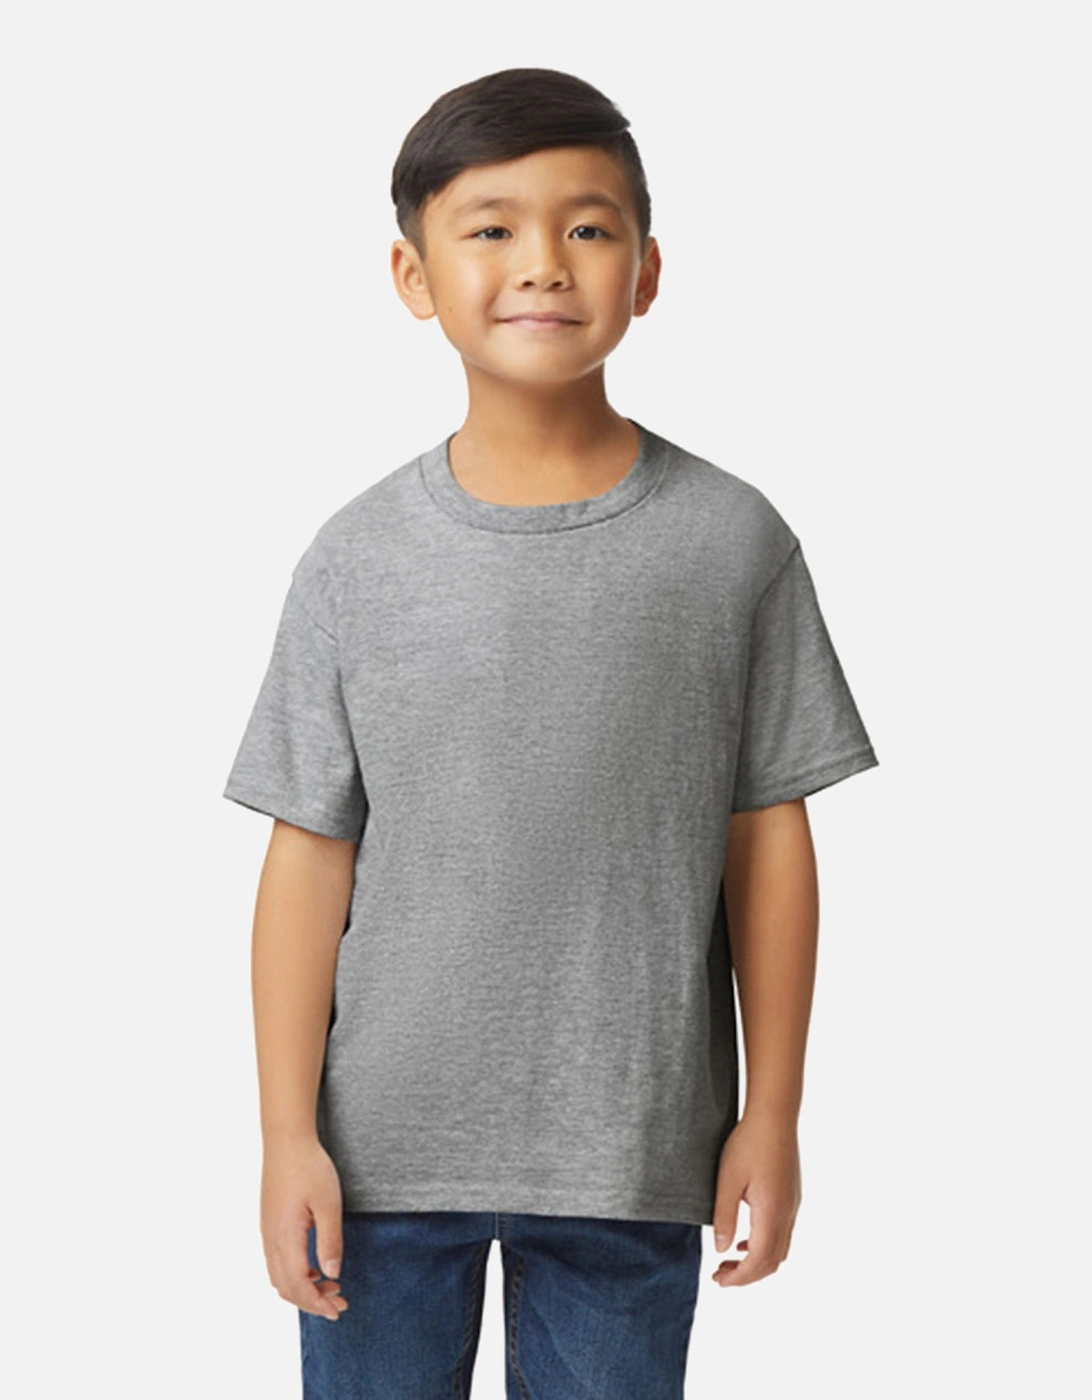 Childrens/Kids Softstyle Midweight T-Shirt